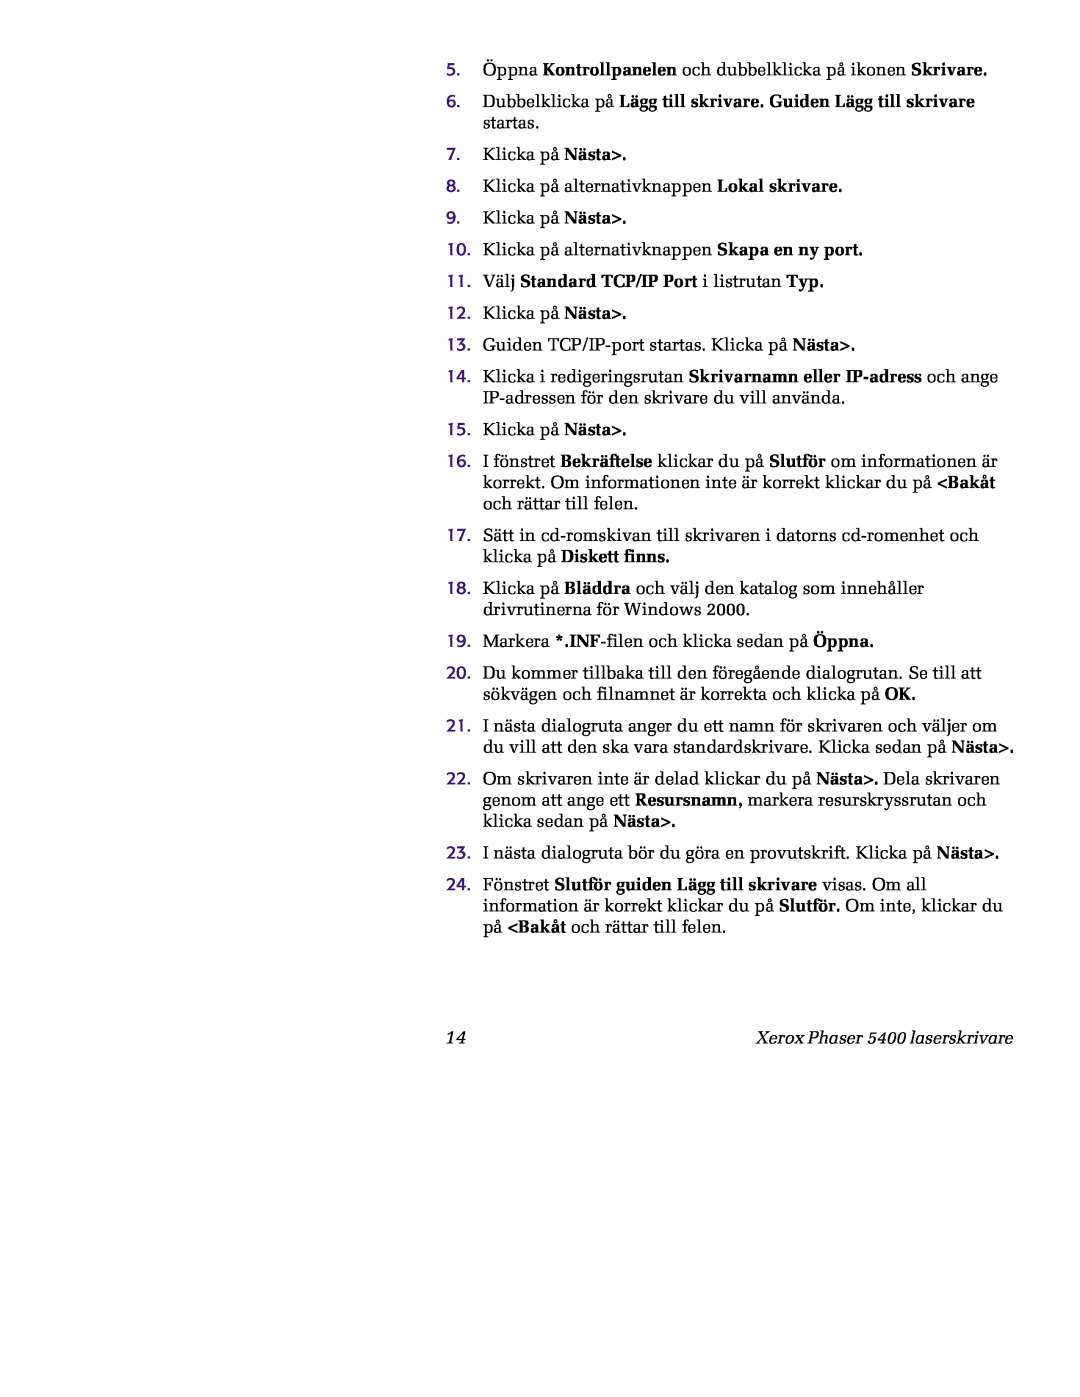 Xerox manual 11.Välj Standard TCP/IP Port i listrutan Typ, Xerox Phaser 5400 laserskrivare 